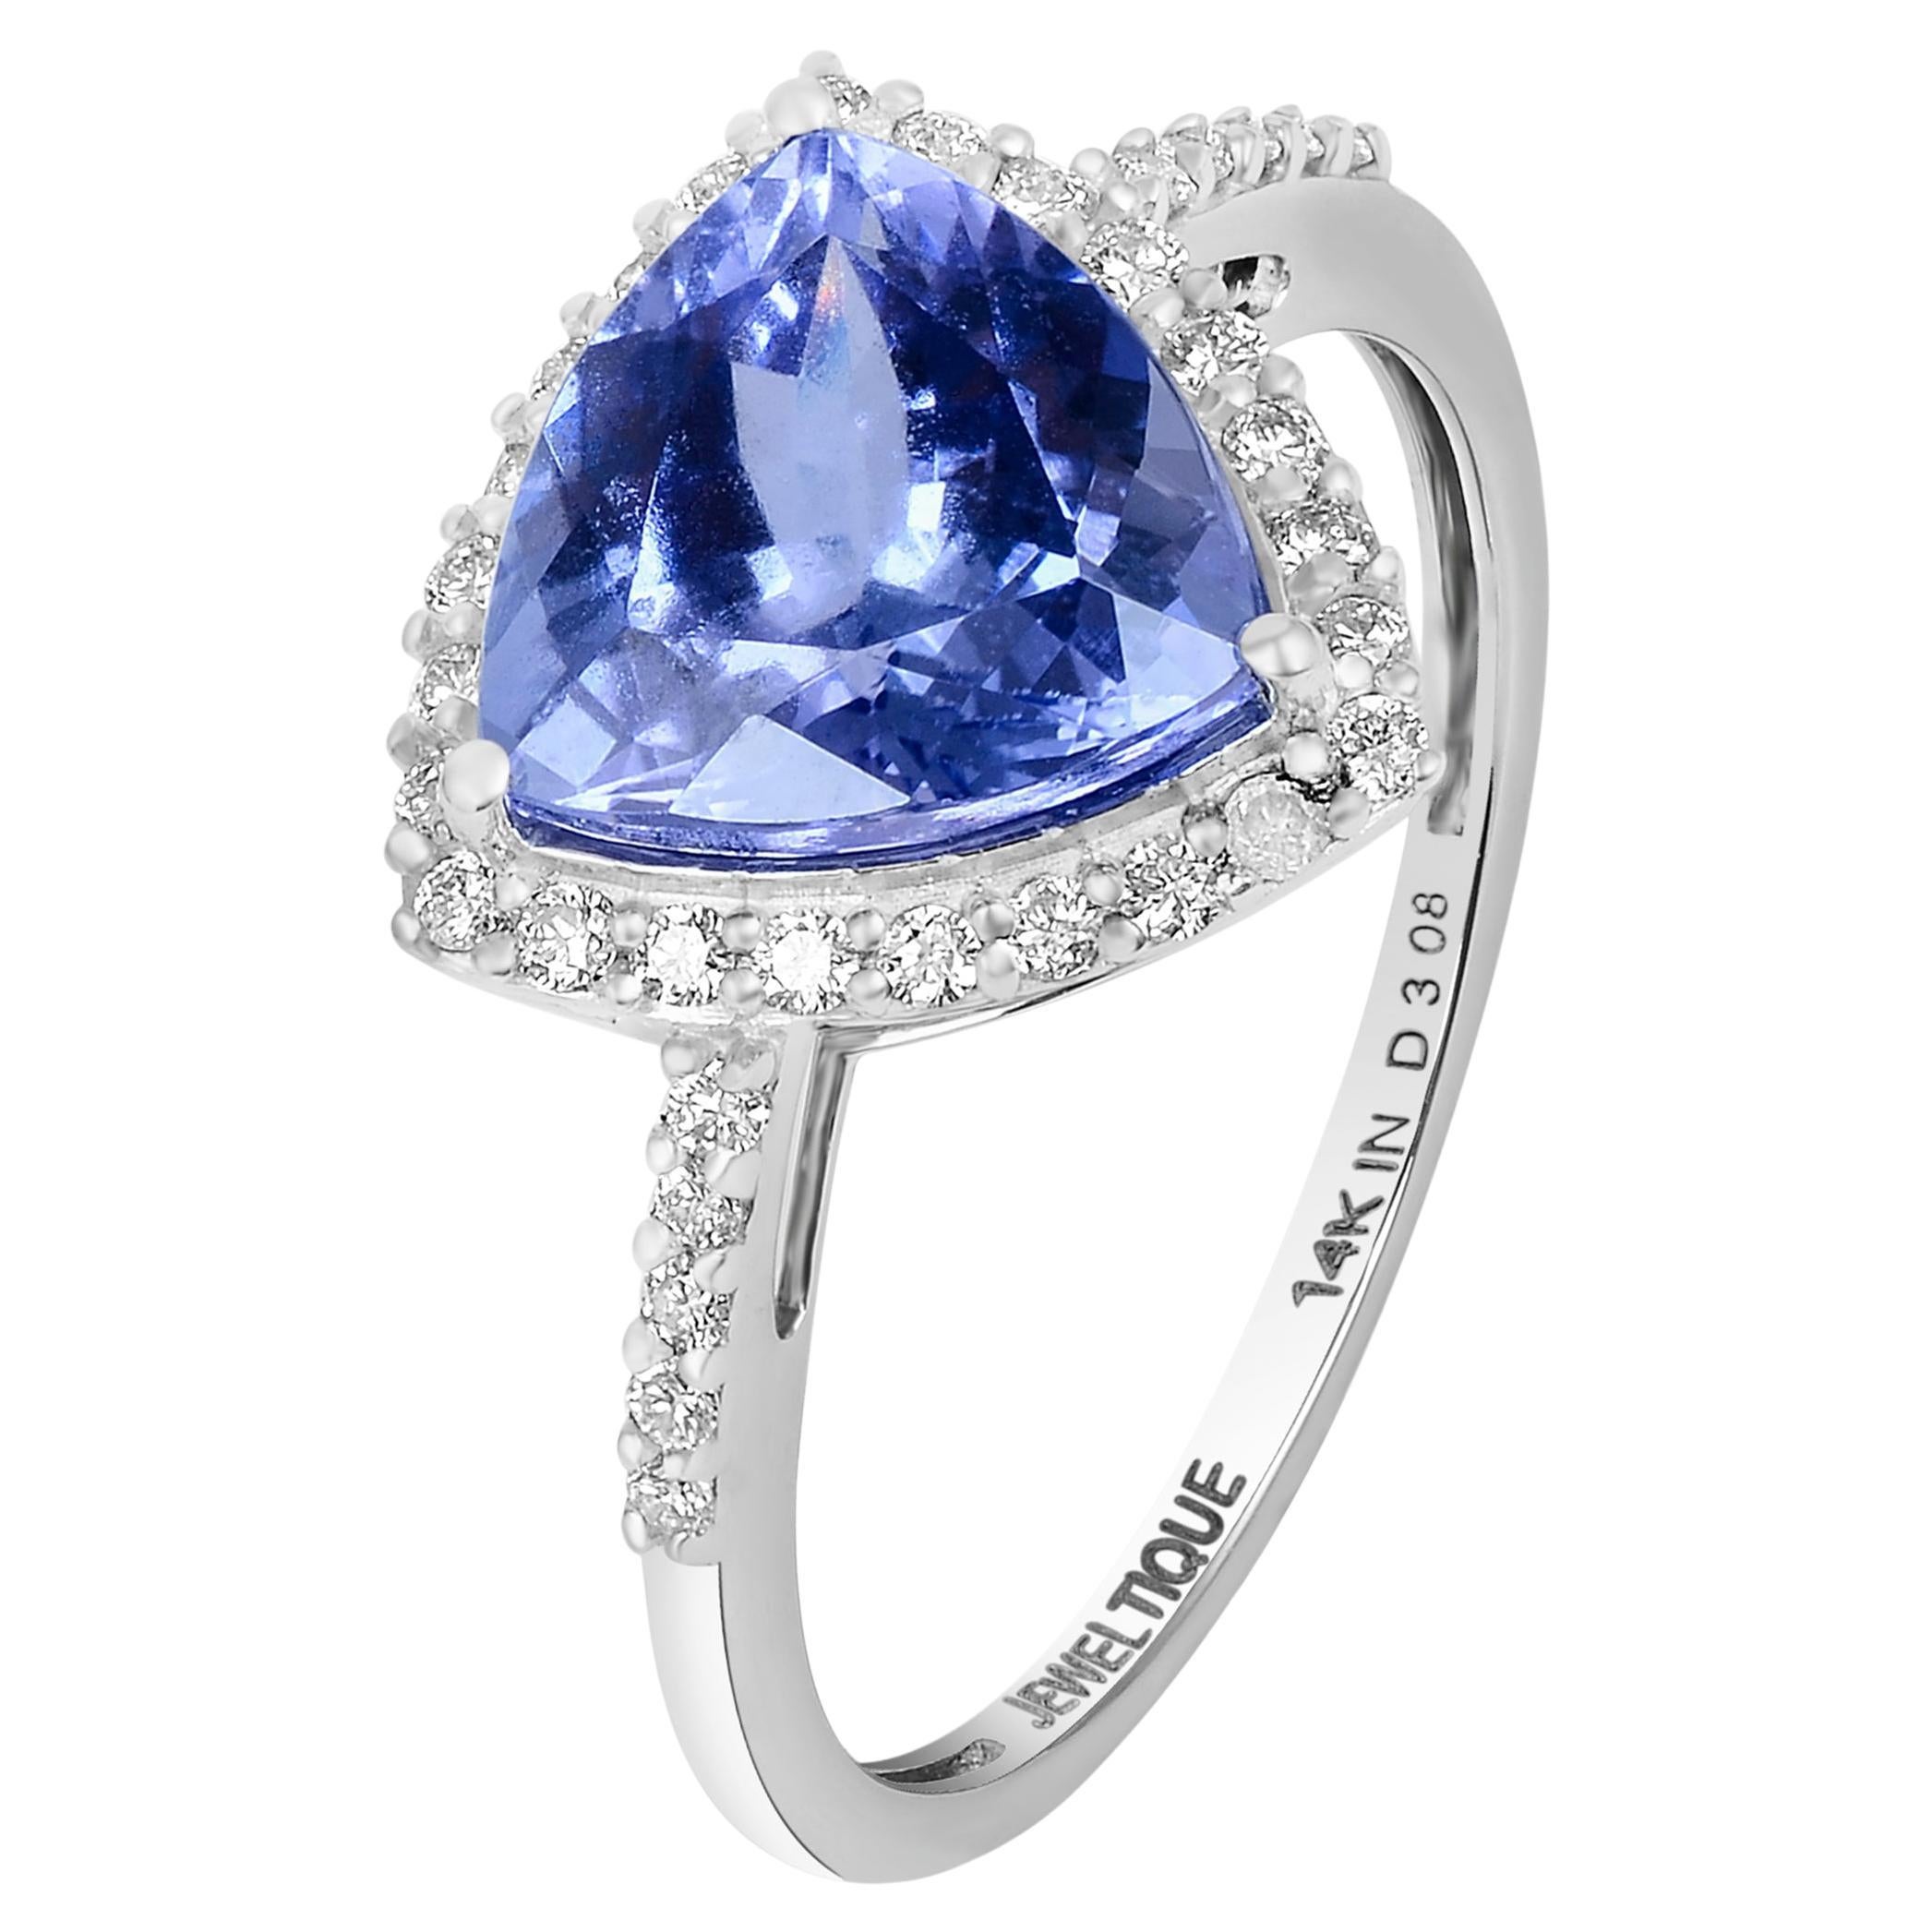 Luxurious 14K Tanzanite & Diamond Cocktail Ring, Size 7 - Statement Jewelry